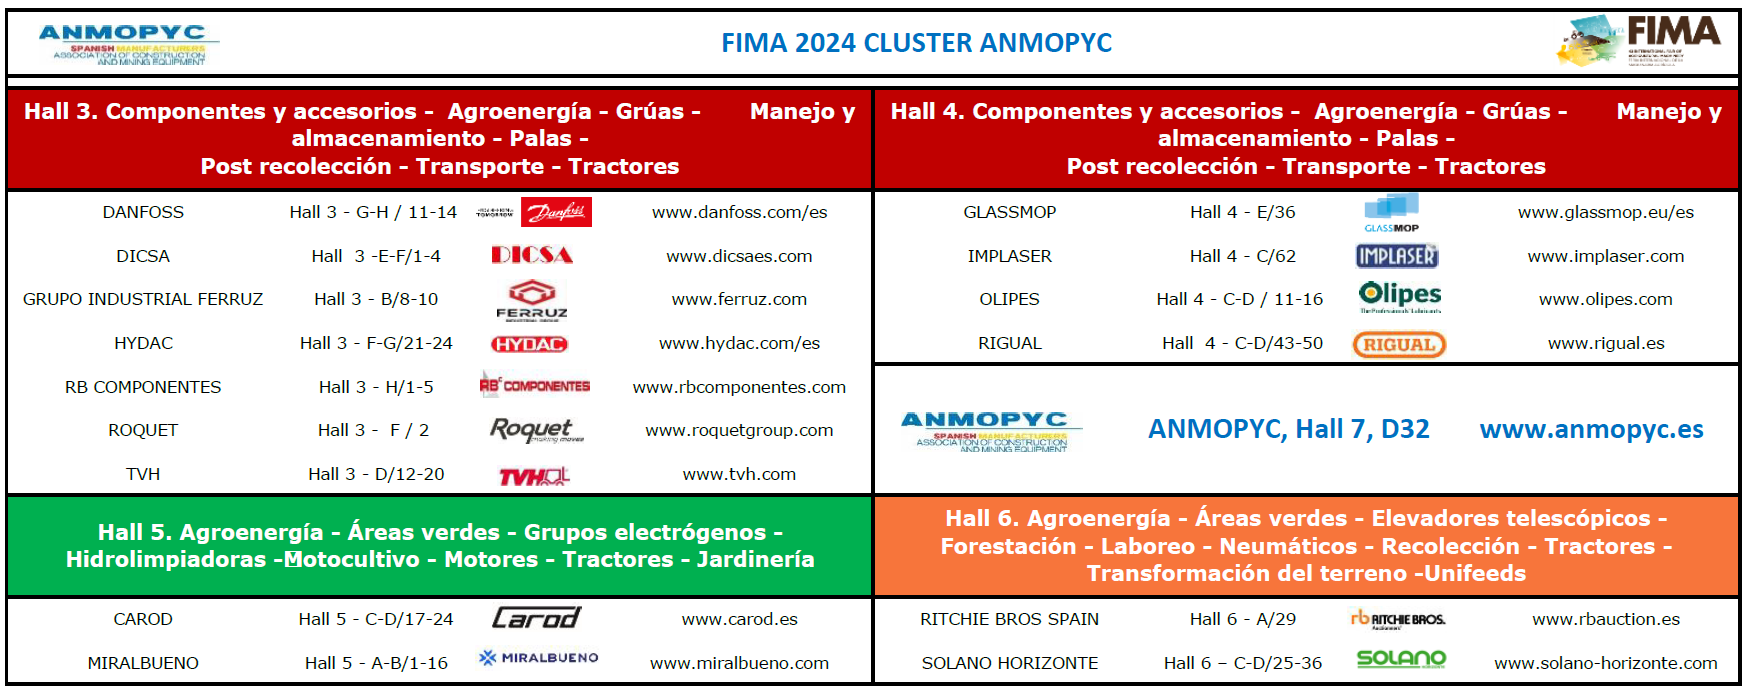 Cluster ANMOPYC en FIMA 2024